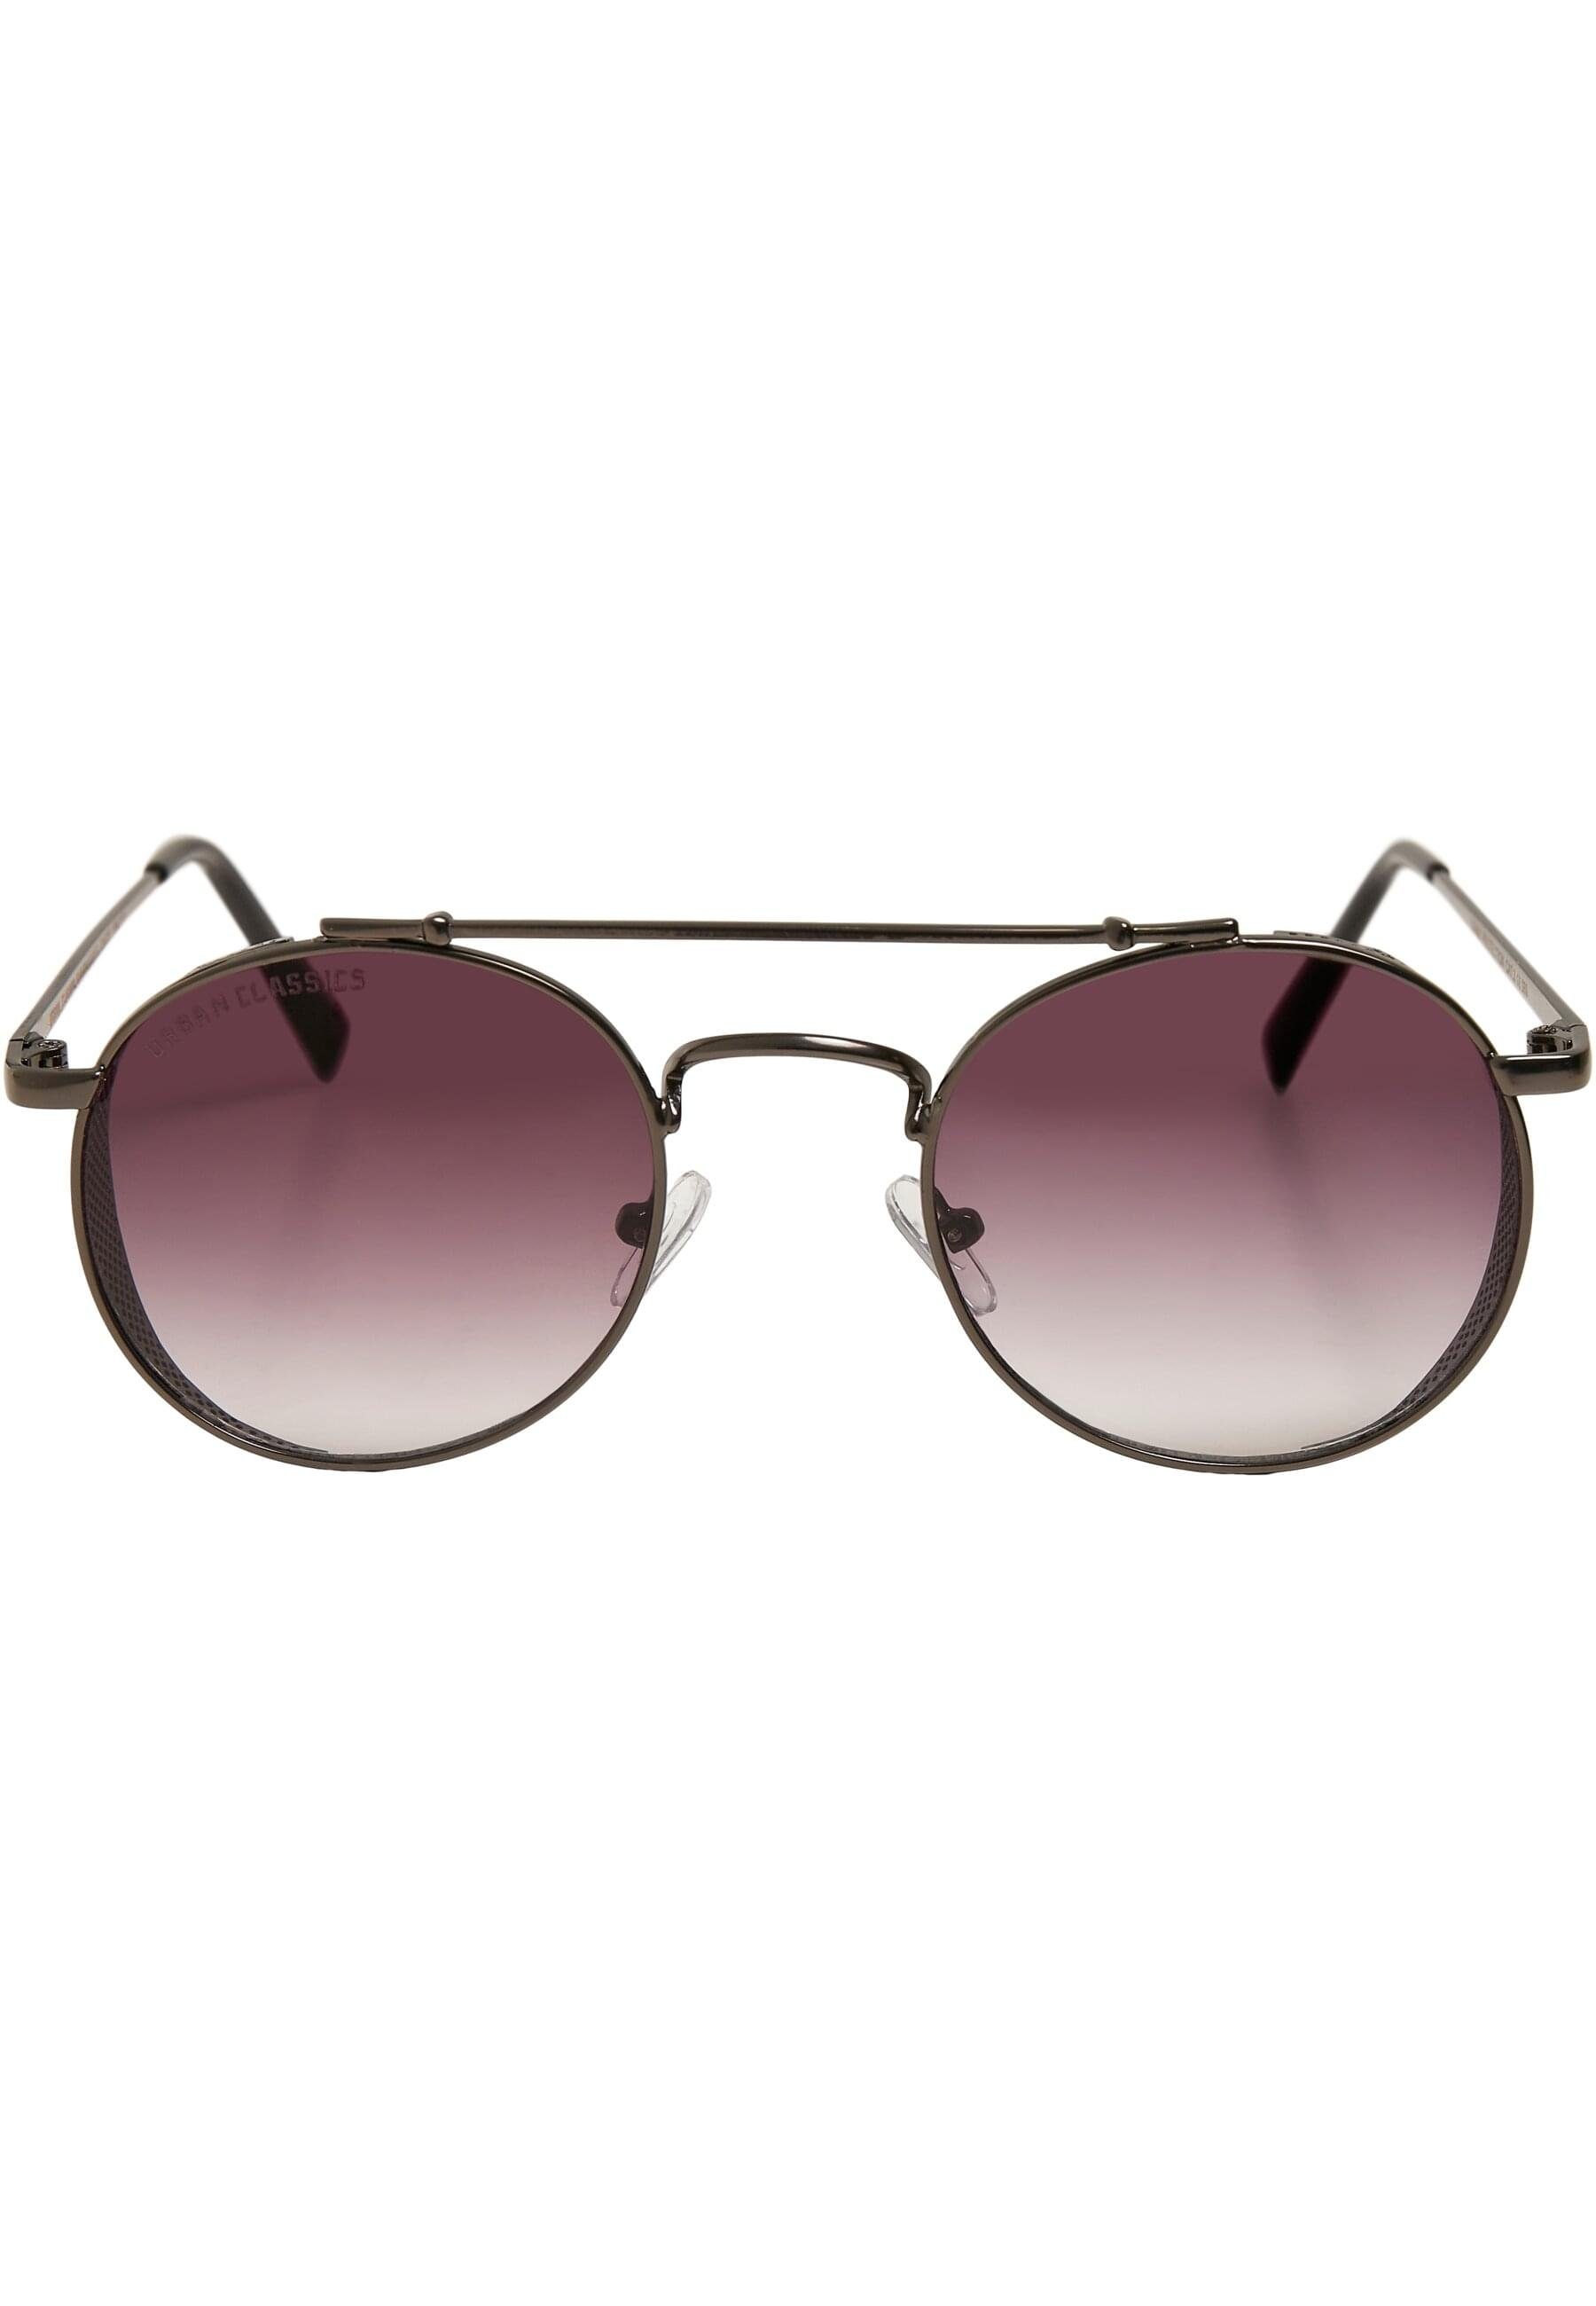 Sonnenbrille CLASSICS Unisex URBAN Chios Sunglasses black/black